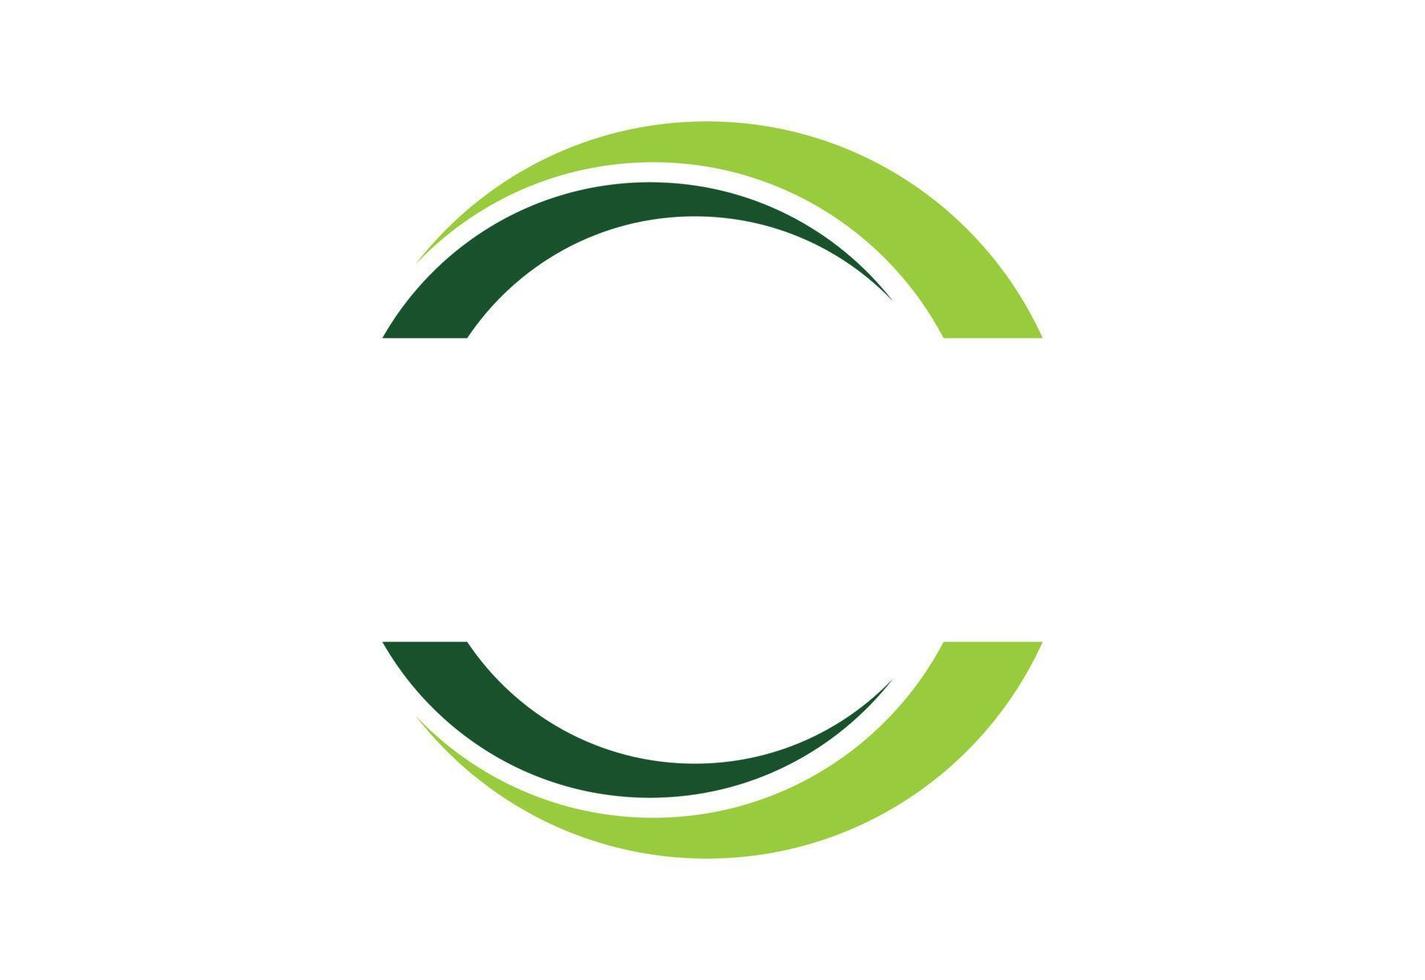 Circle shape logo design, Vector illustration